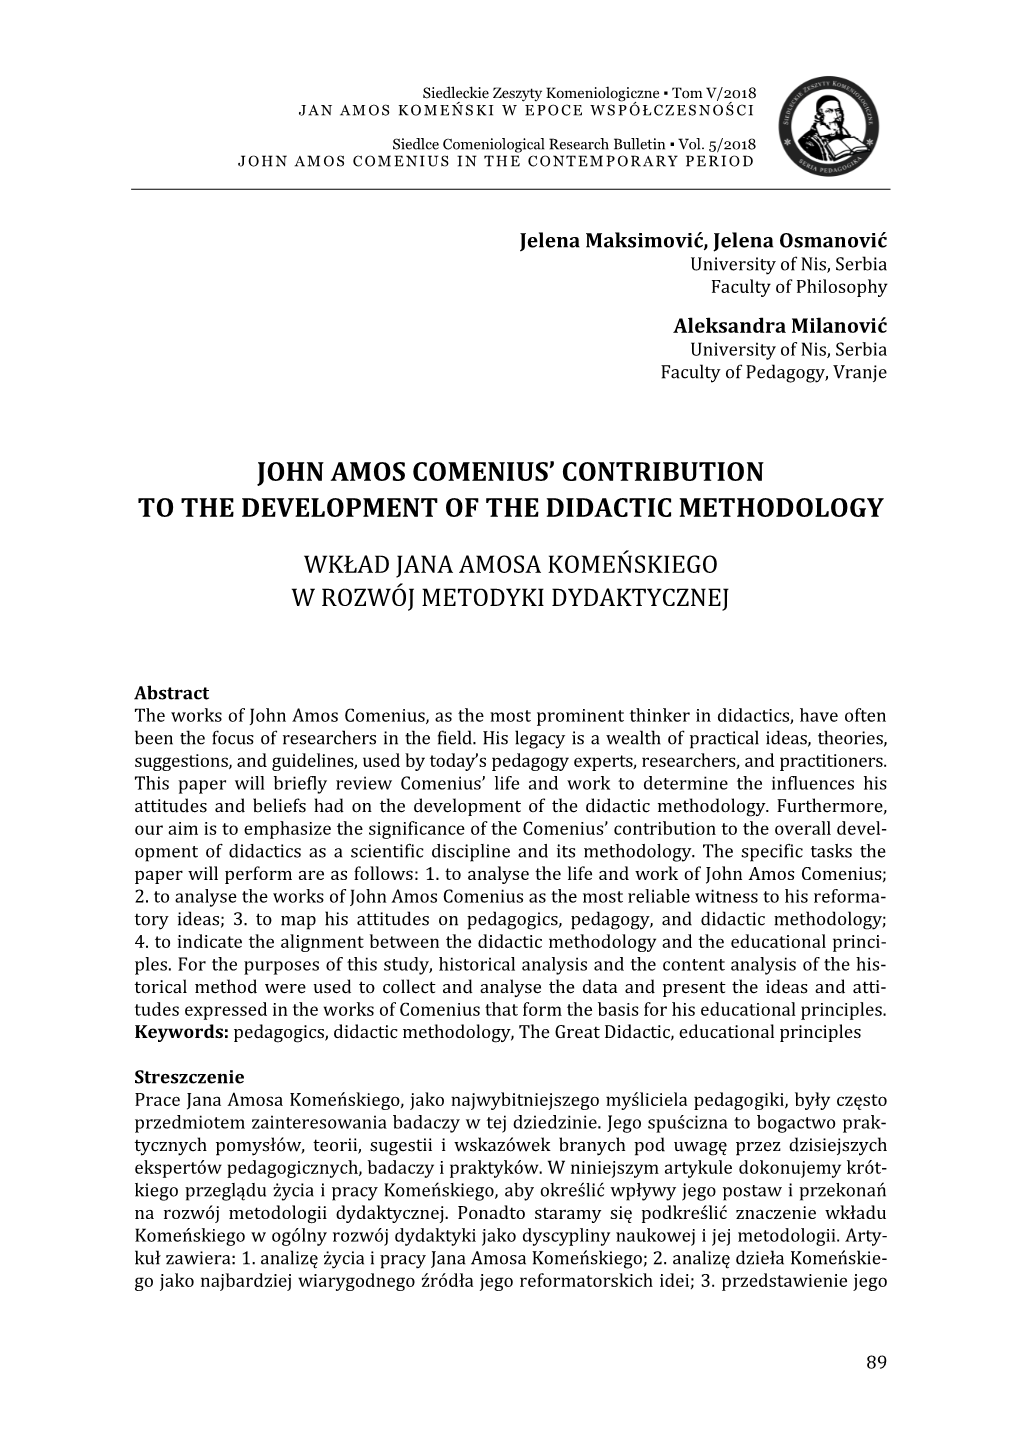 John Amos Comenius' Contribution to The